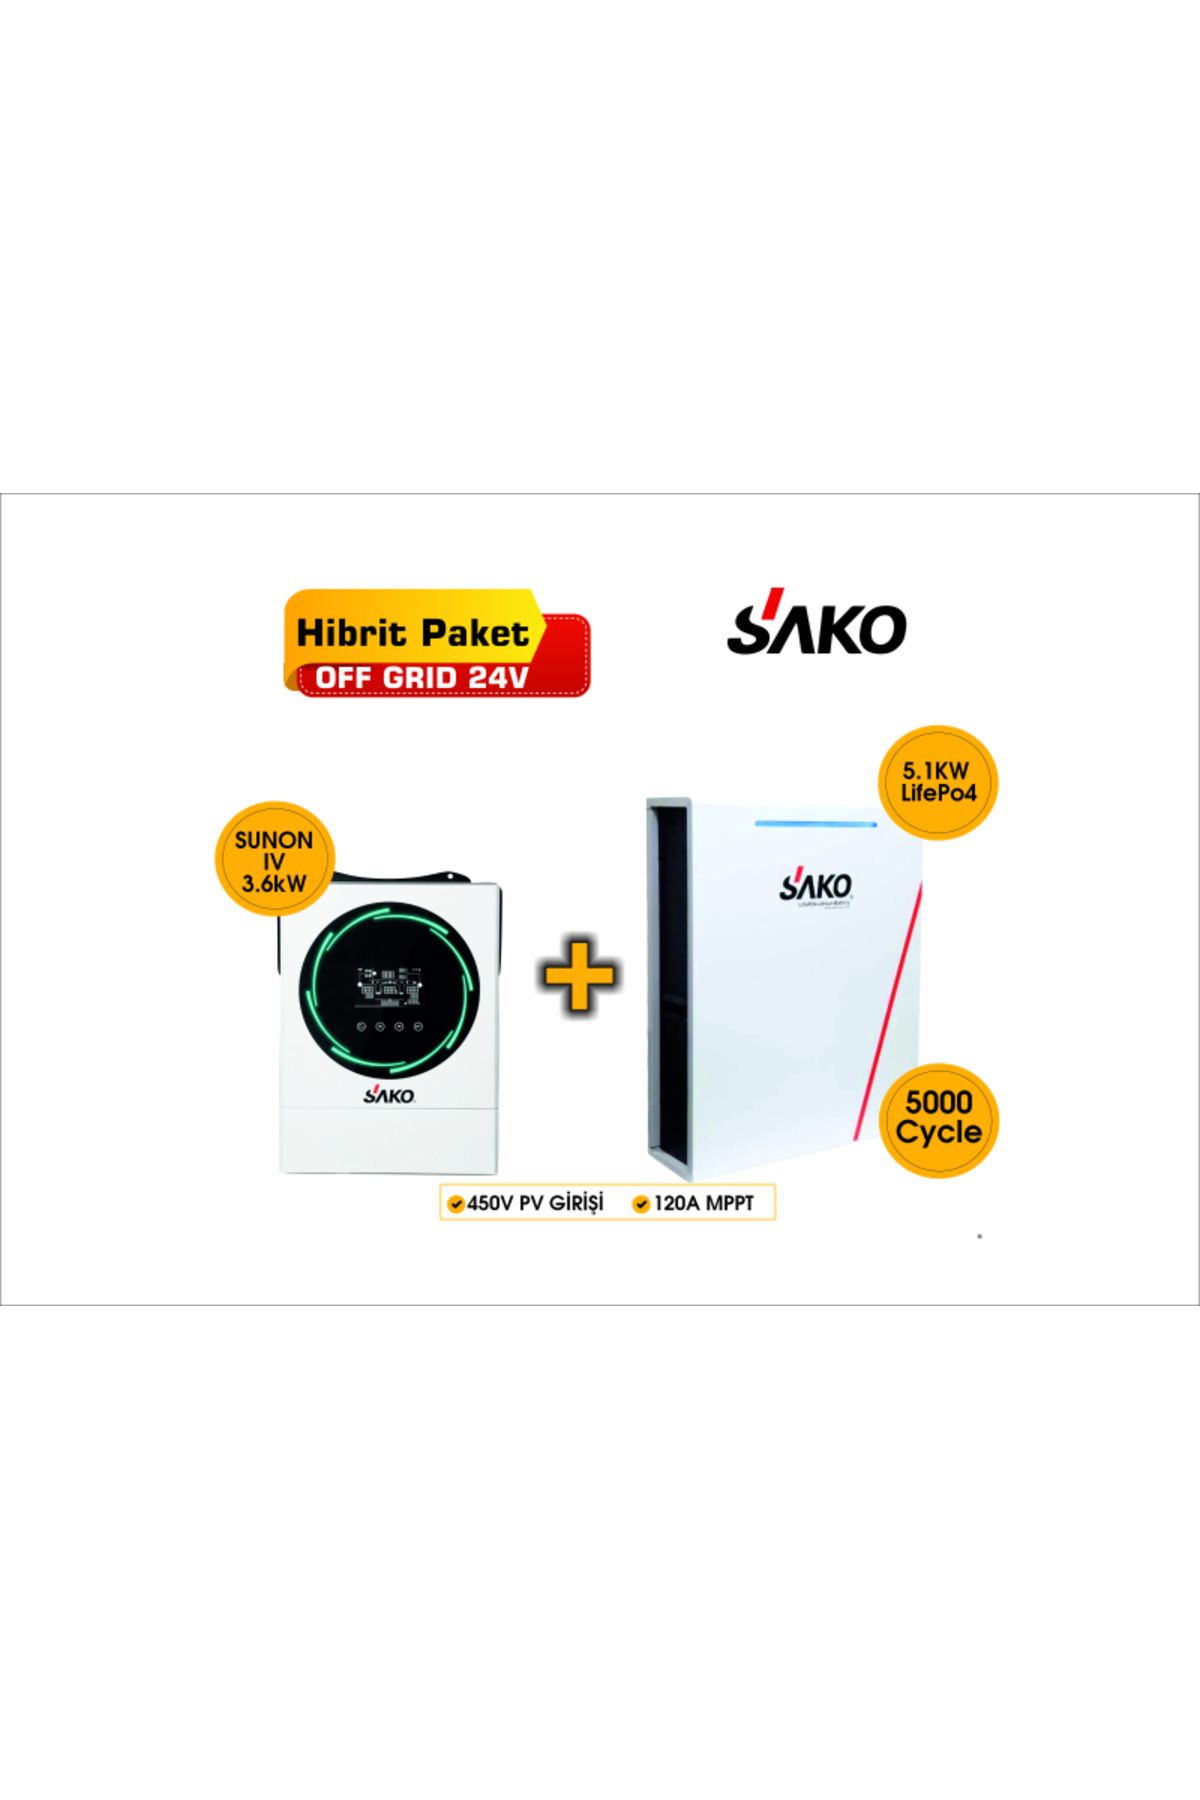 SAKO Off-grid Hibrit Paket 3.6kw Akıllı Inverter 5.1kwh Lityum Batarya Lifepo4 Akü